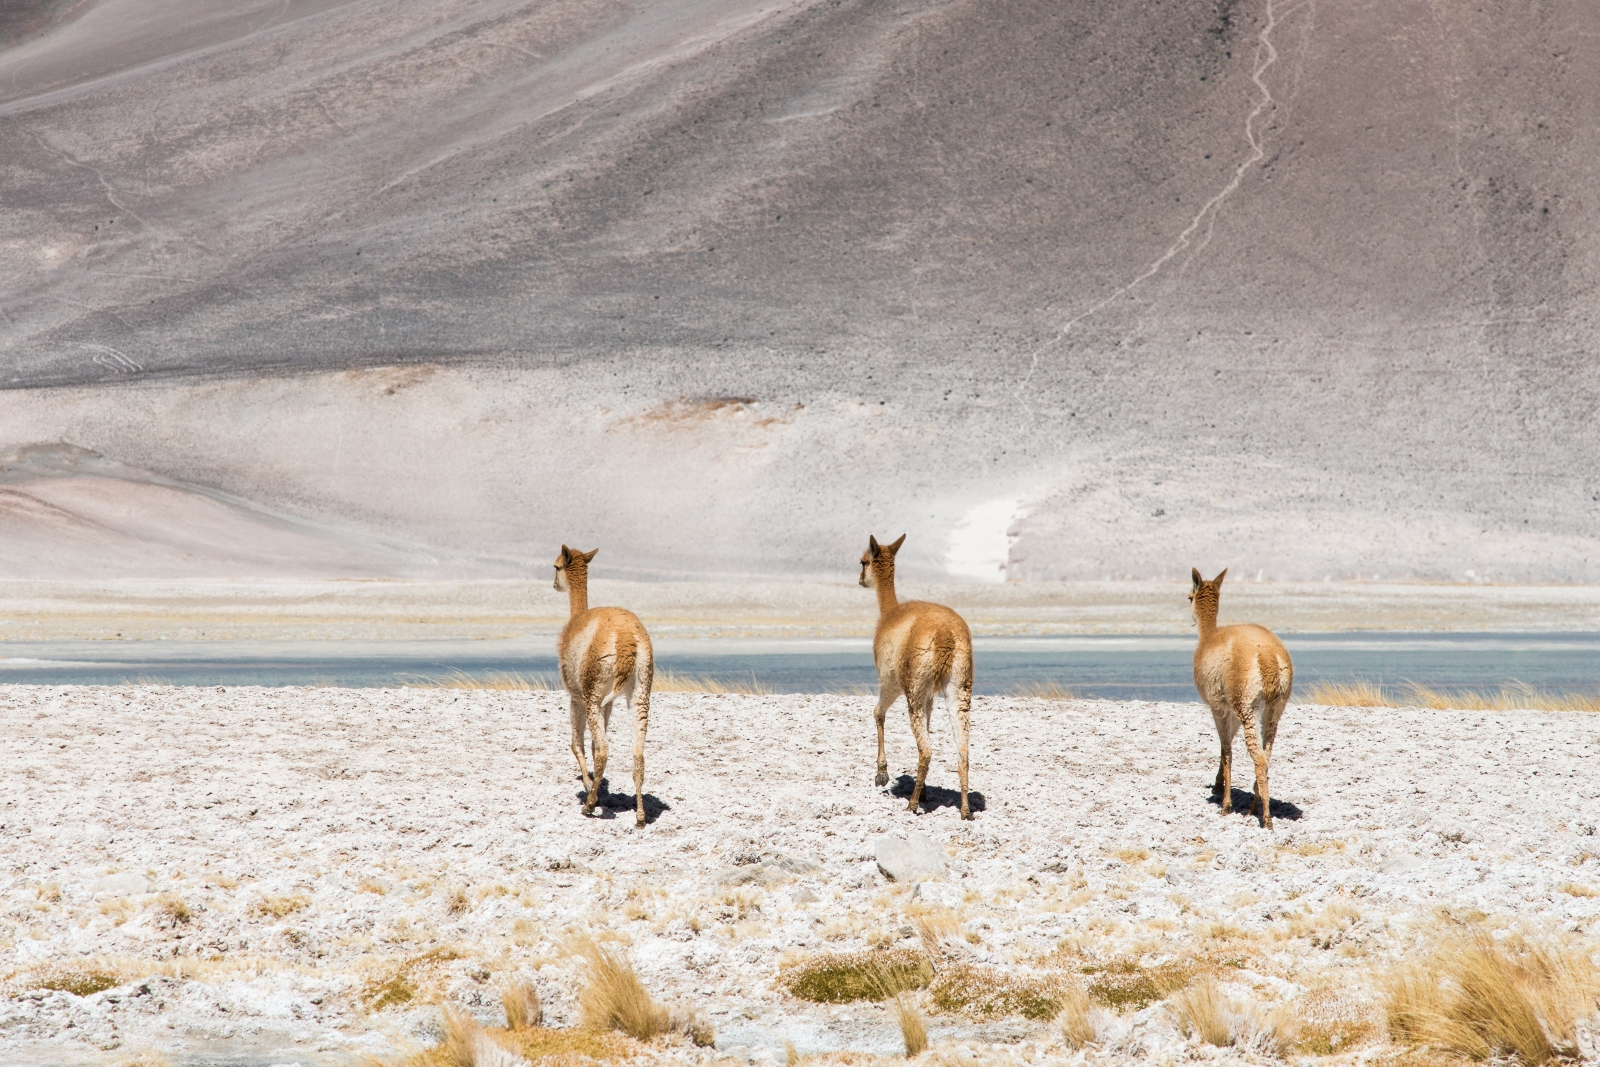 Three alpacas walking in the Atacama desert